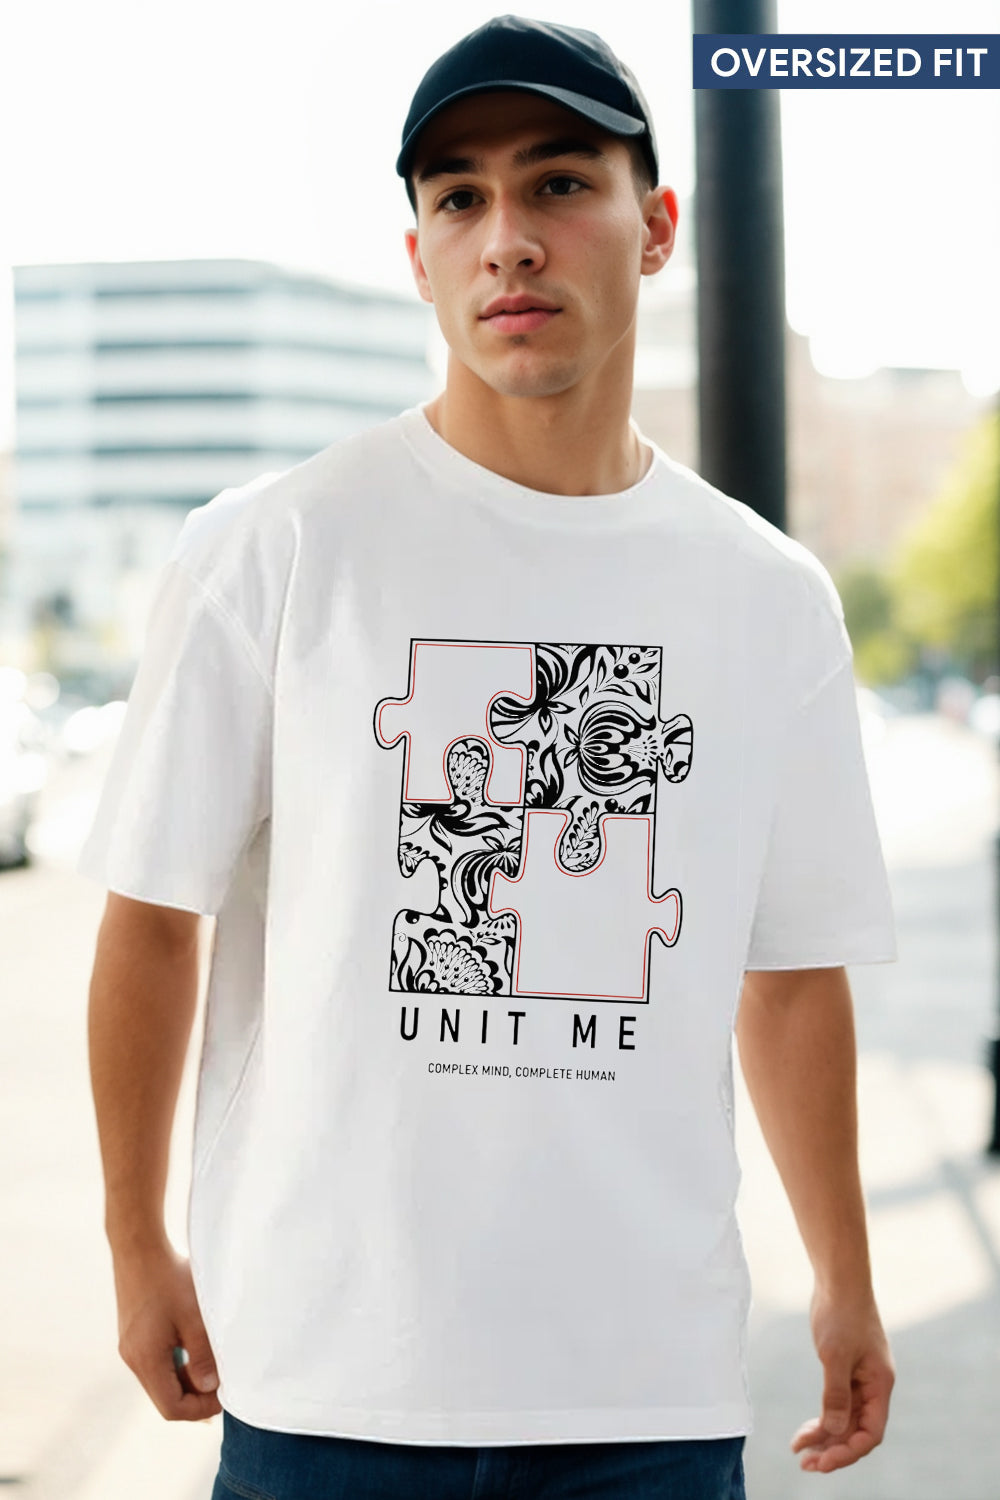 Unit Me Oversized T-Shirt